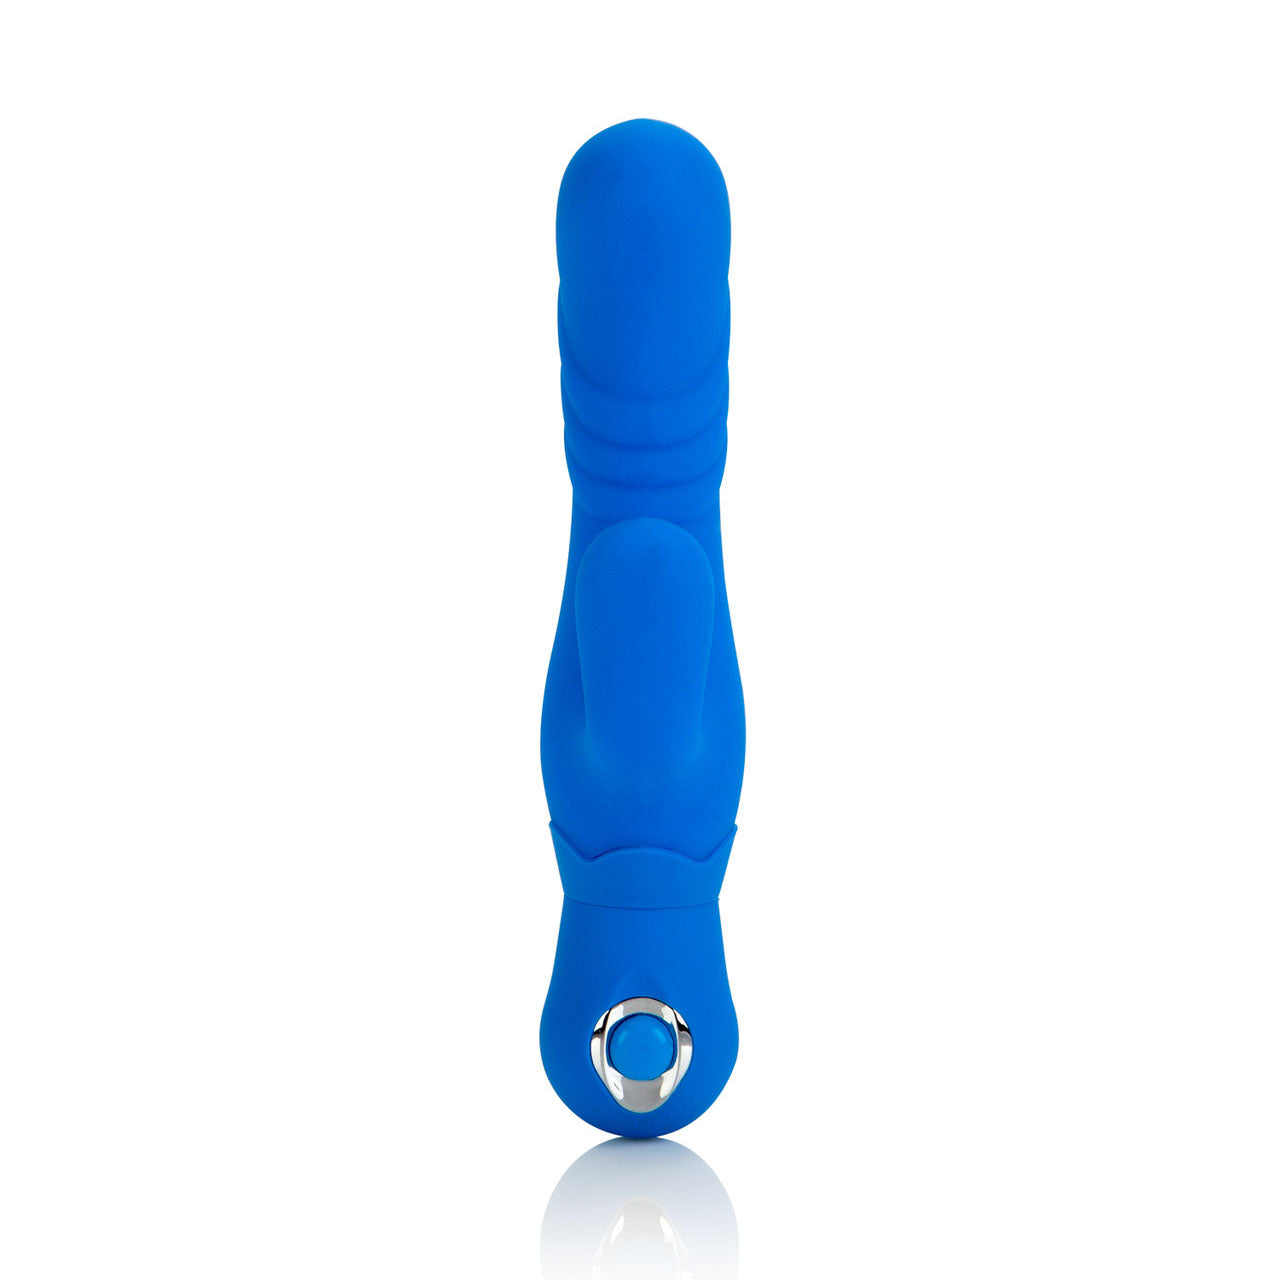 Posh Silicone Thumper G-Spot Vibe - Blue